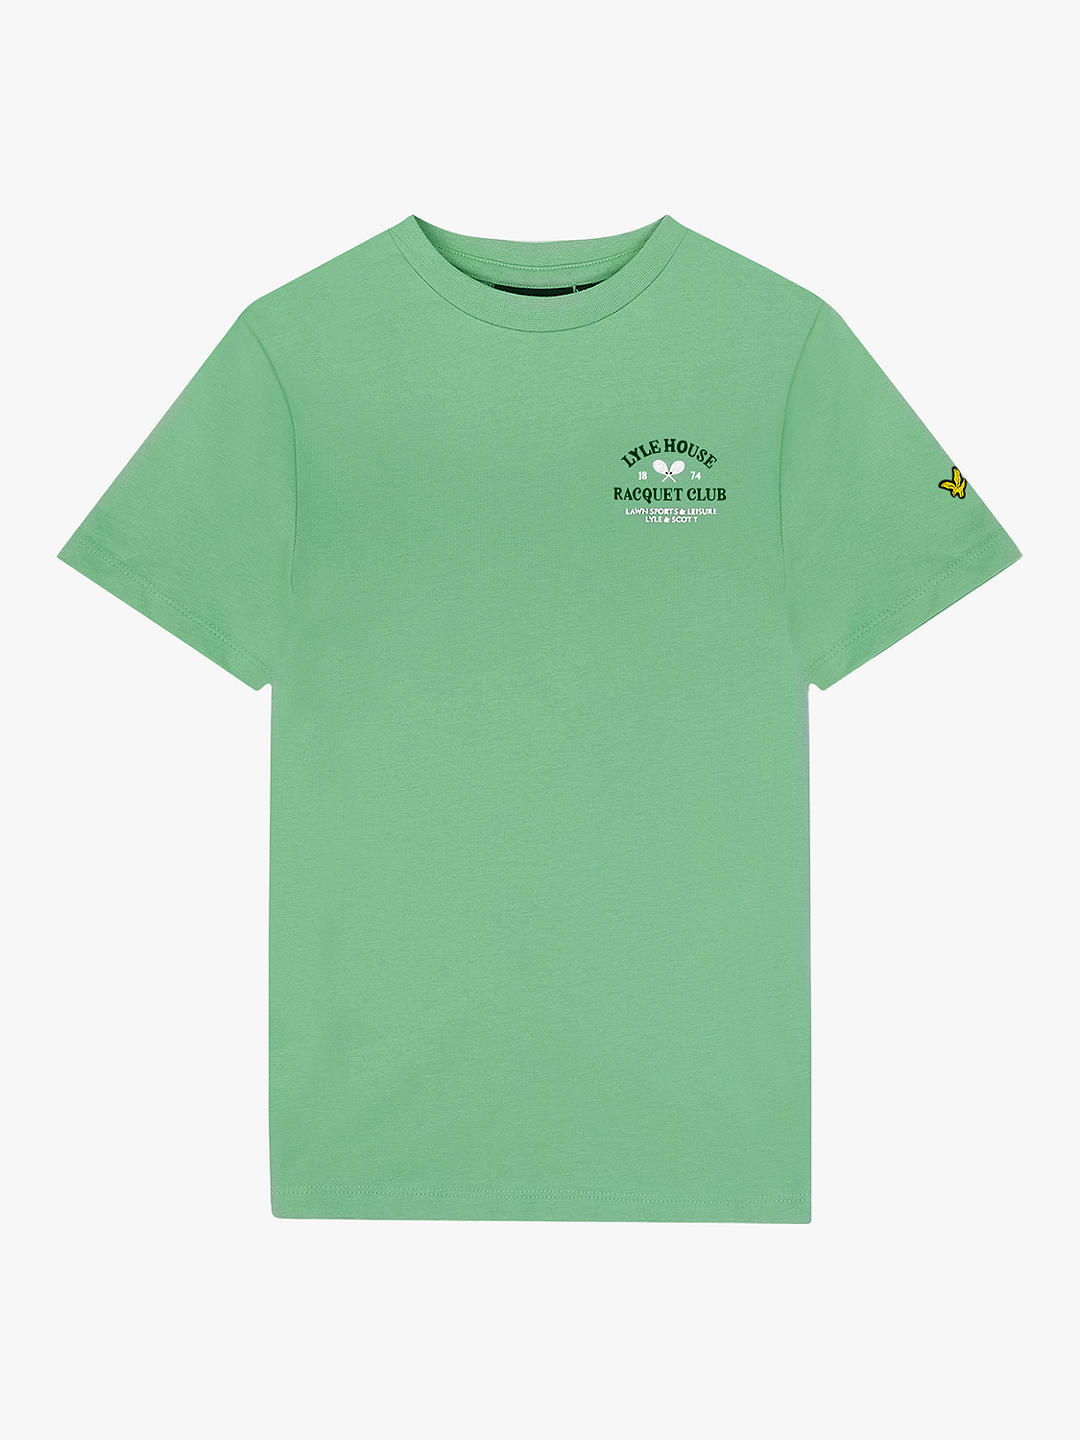 Lyle & Scott Kids' Racquet Club Graphic T-Shirt, Lawn Green